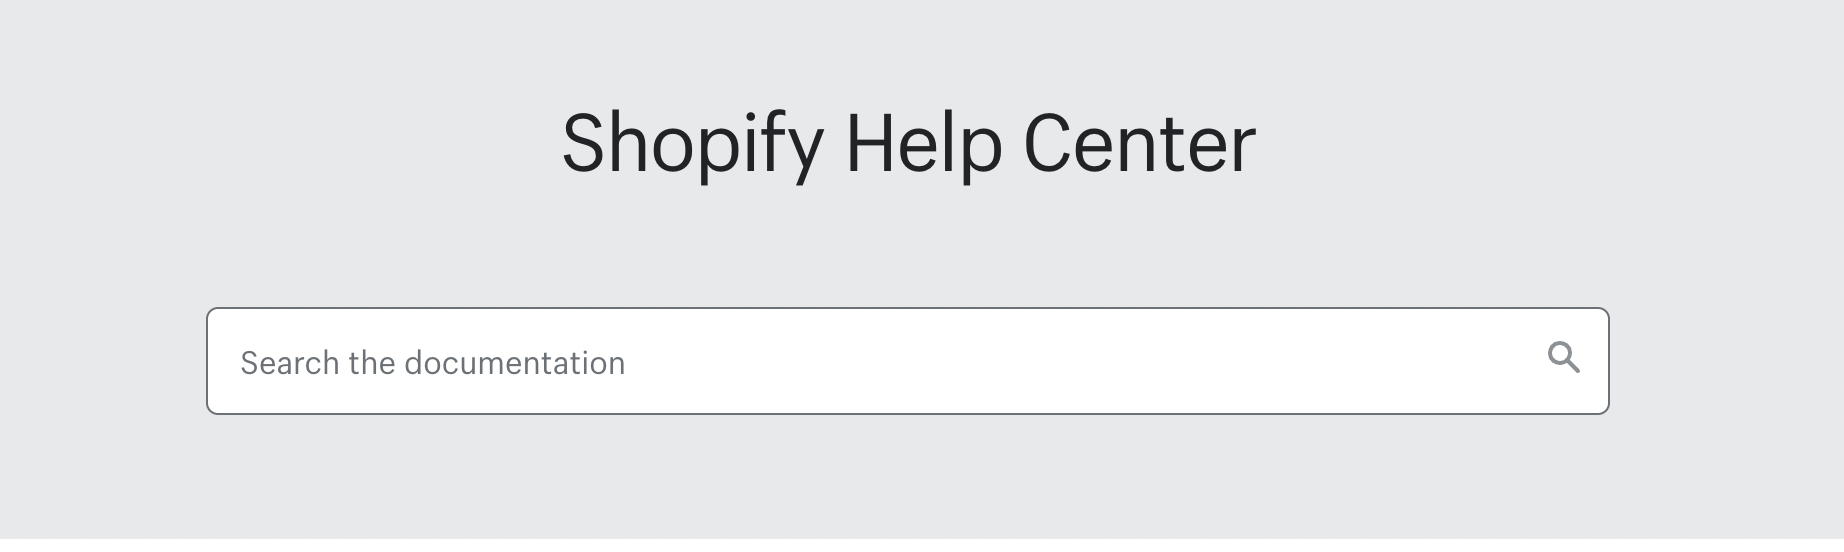 shopify help center